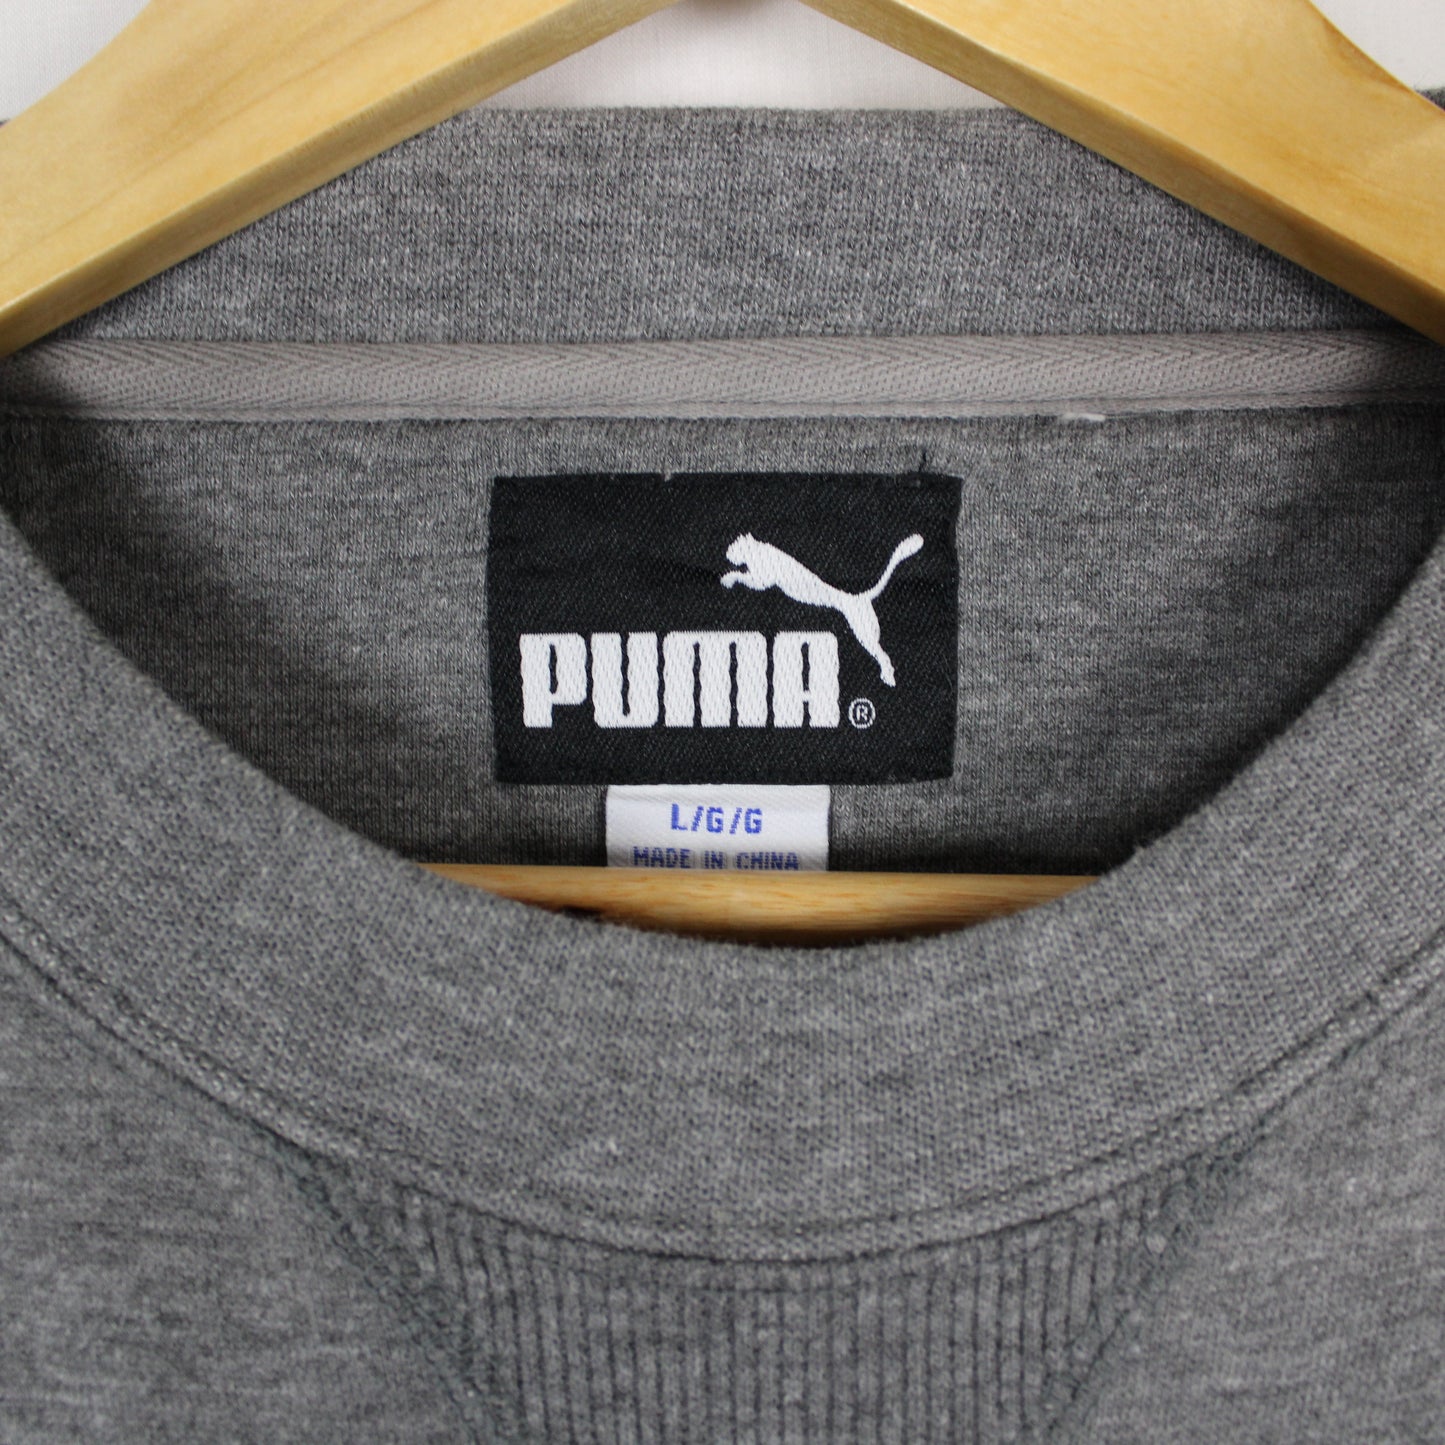 Vintage Cleveland Browns Puma NFL Sweatshirt - L